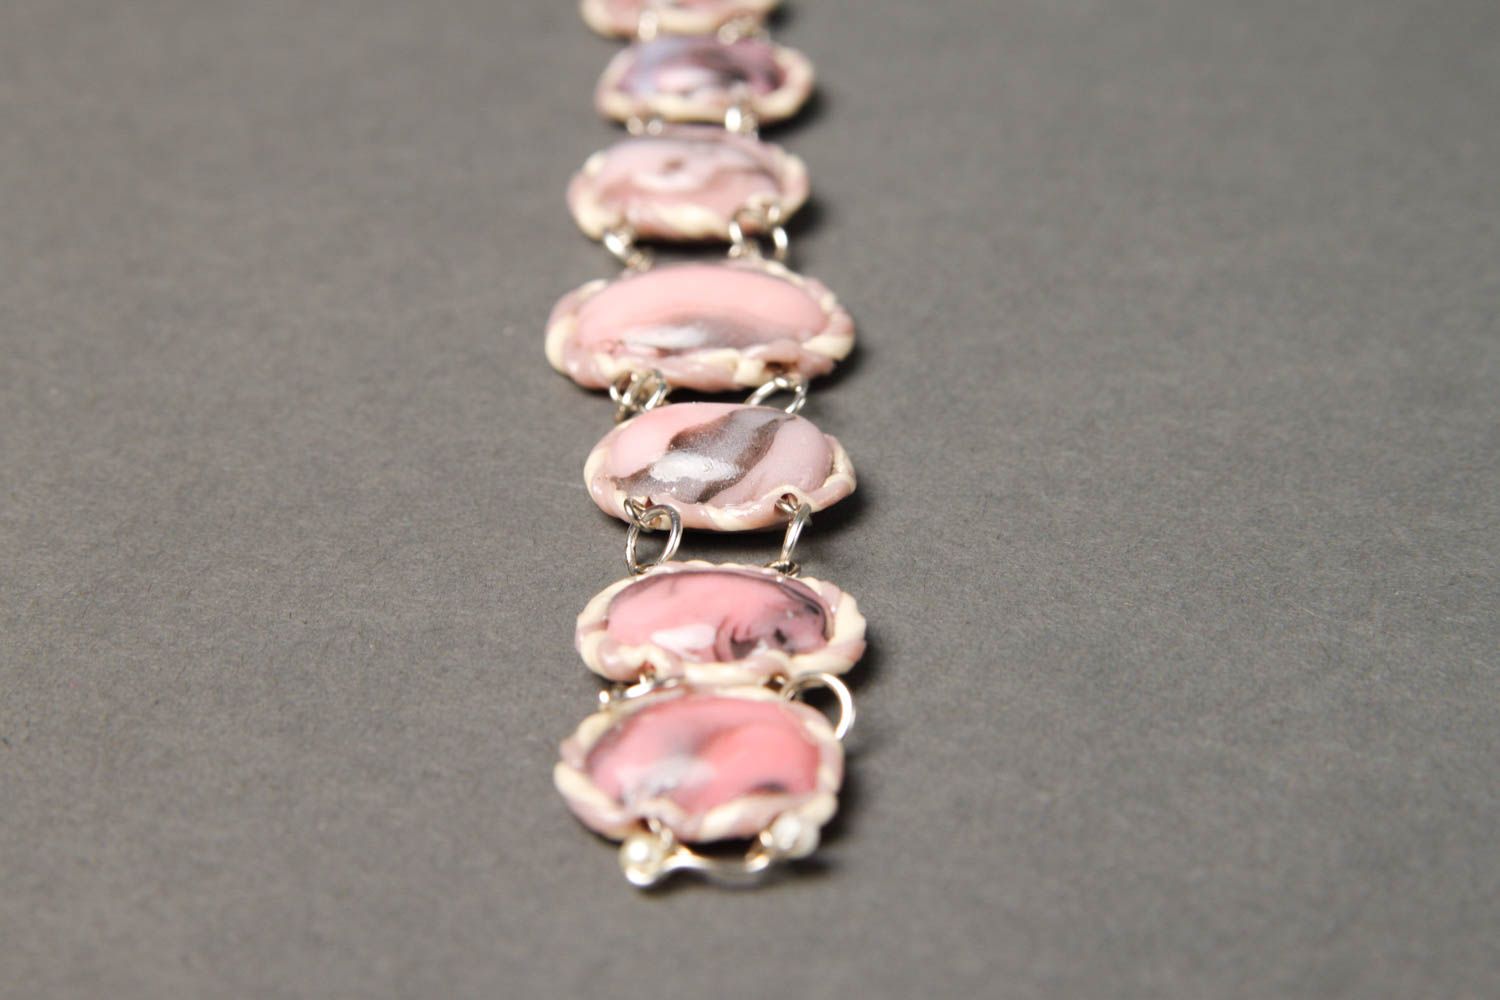 Unusual handmade plastic necklace bracelet designs cool jewelry set ideas photo 4